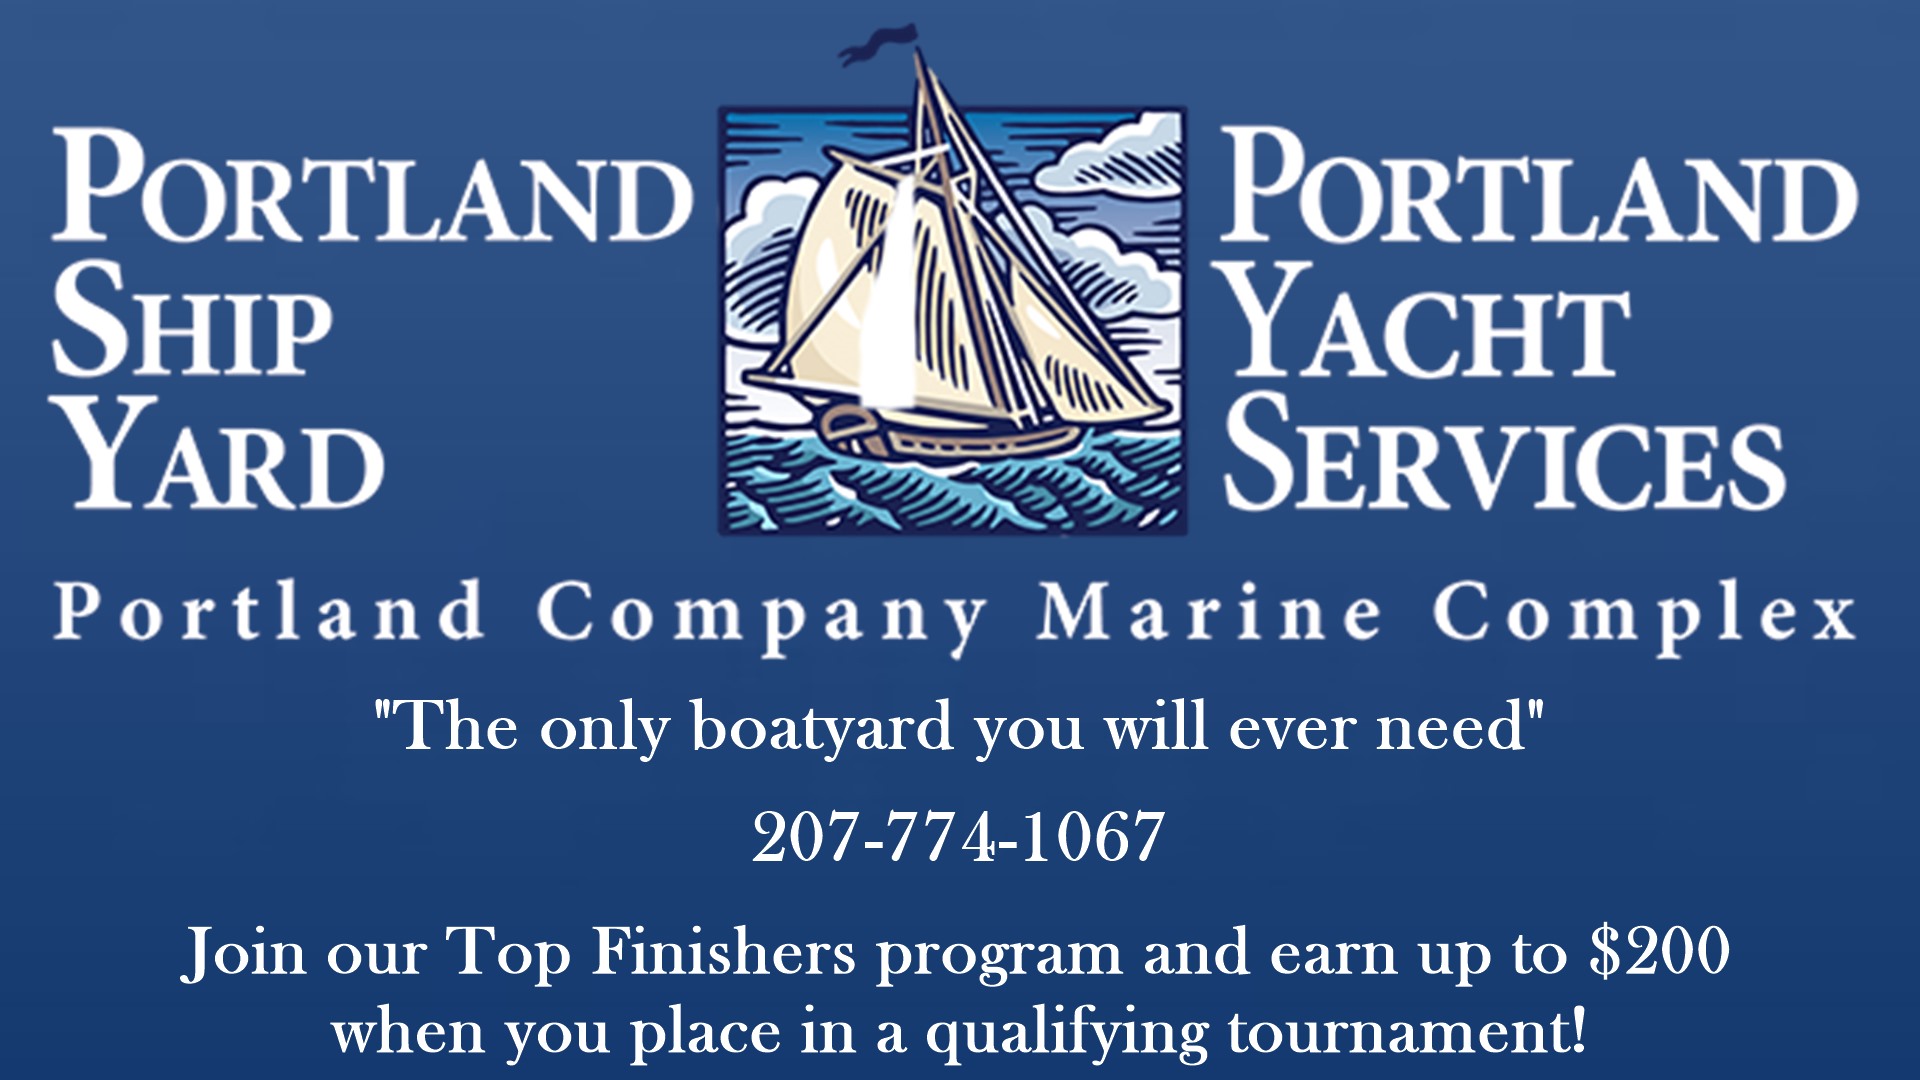 "Portland Shipyard Portland Yacht Services Portland Company Marine Complex.The only boatyard you will ever need"